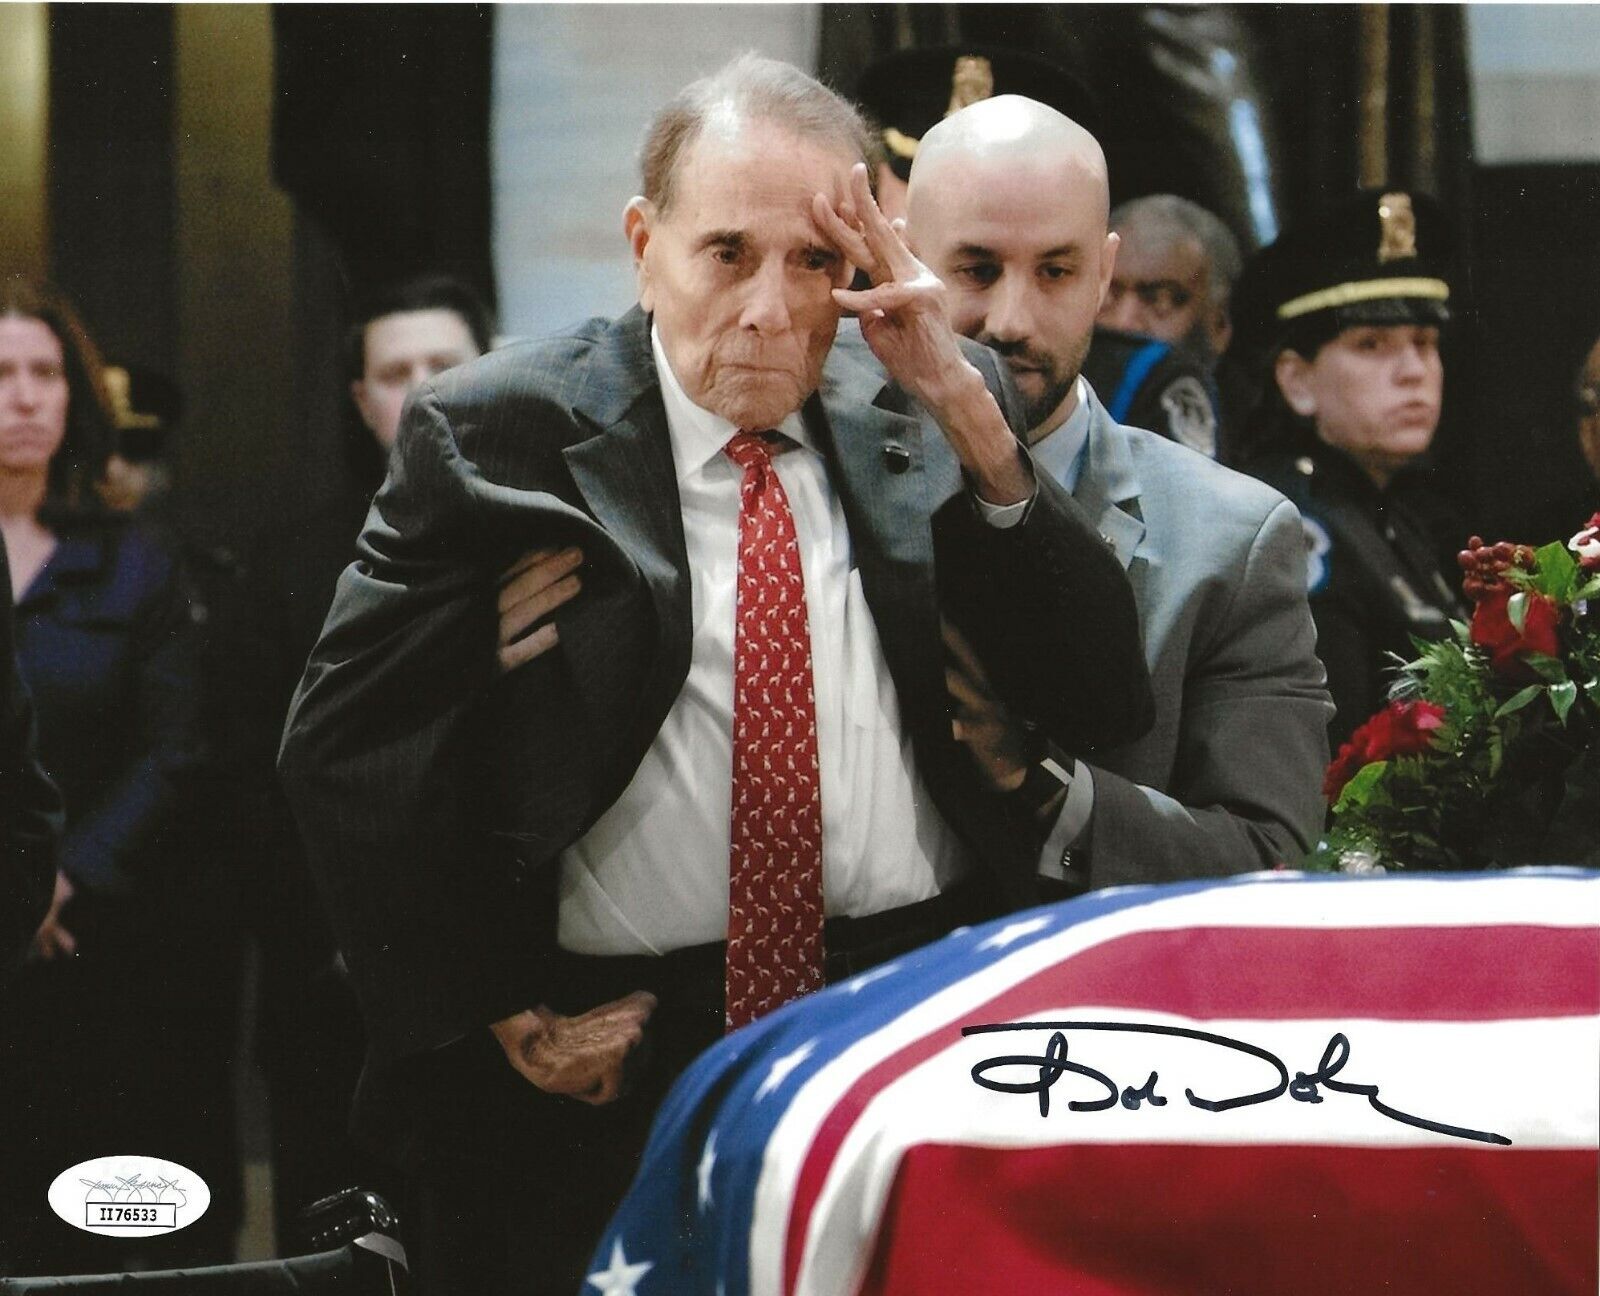 Bob Dole USA Senator Presidential Candidate signed 8x10 Photo Poster painting autographed 2 JSA